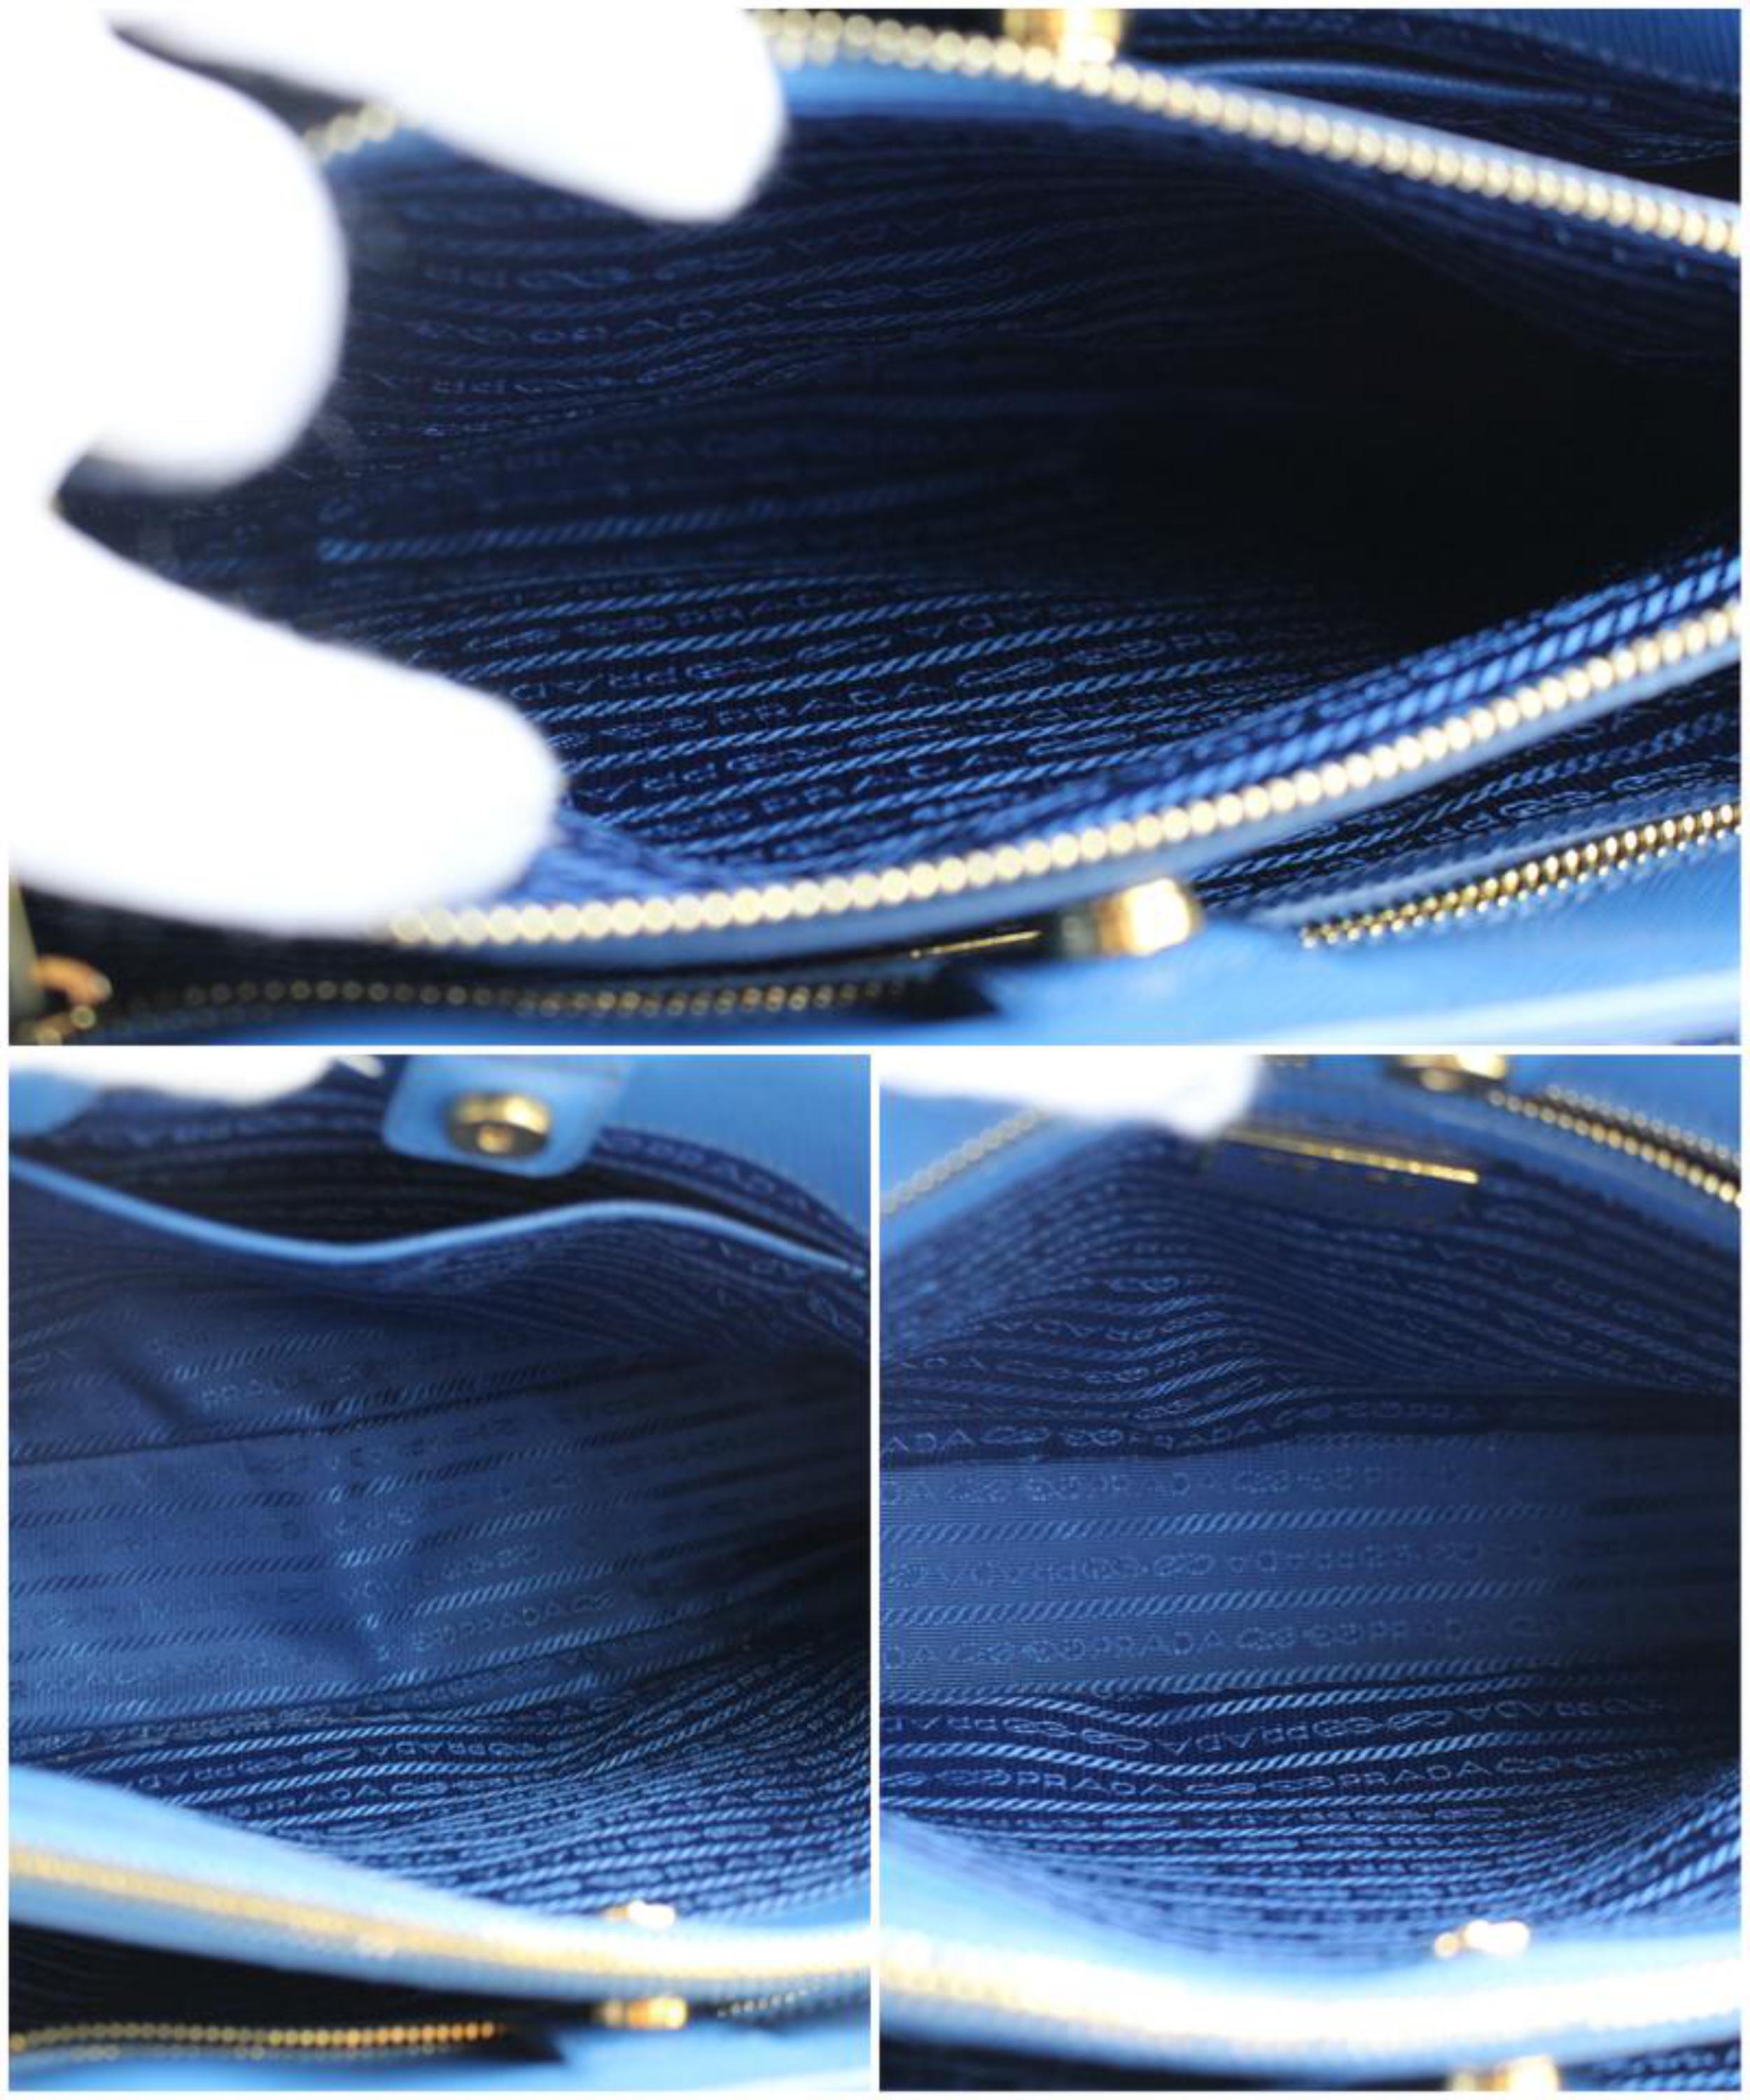 Prada Lux Saffiano 2way 2pr1205 Blue Patent Leather Tote For Sale 5